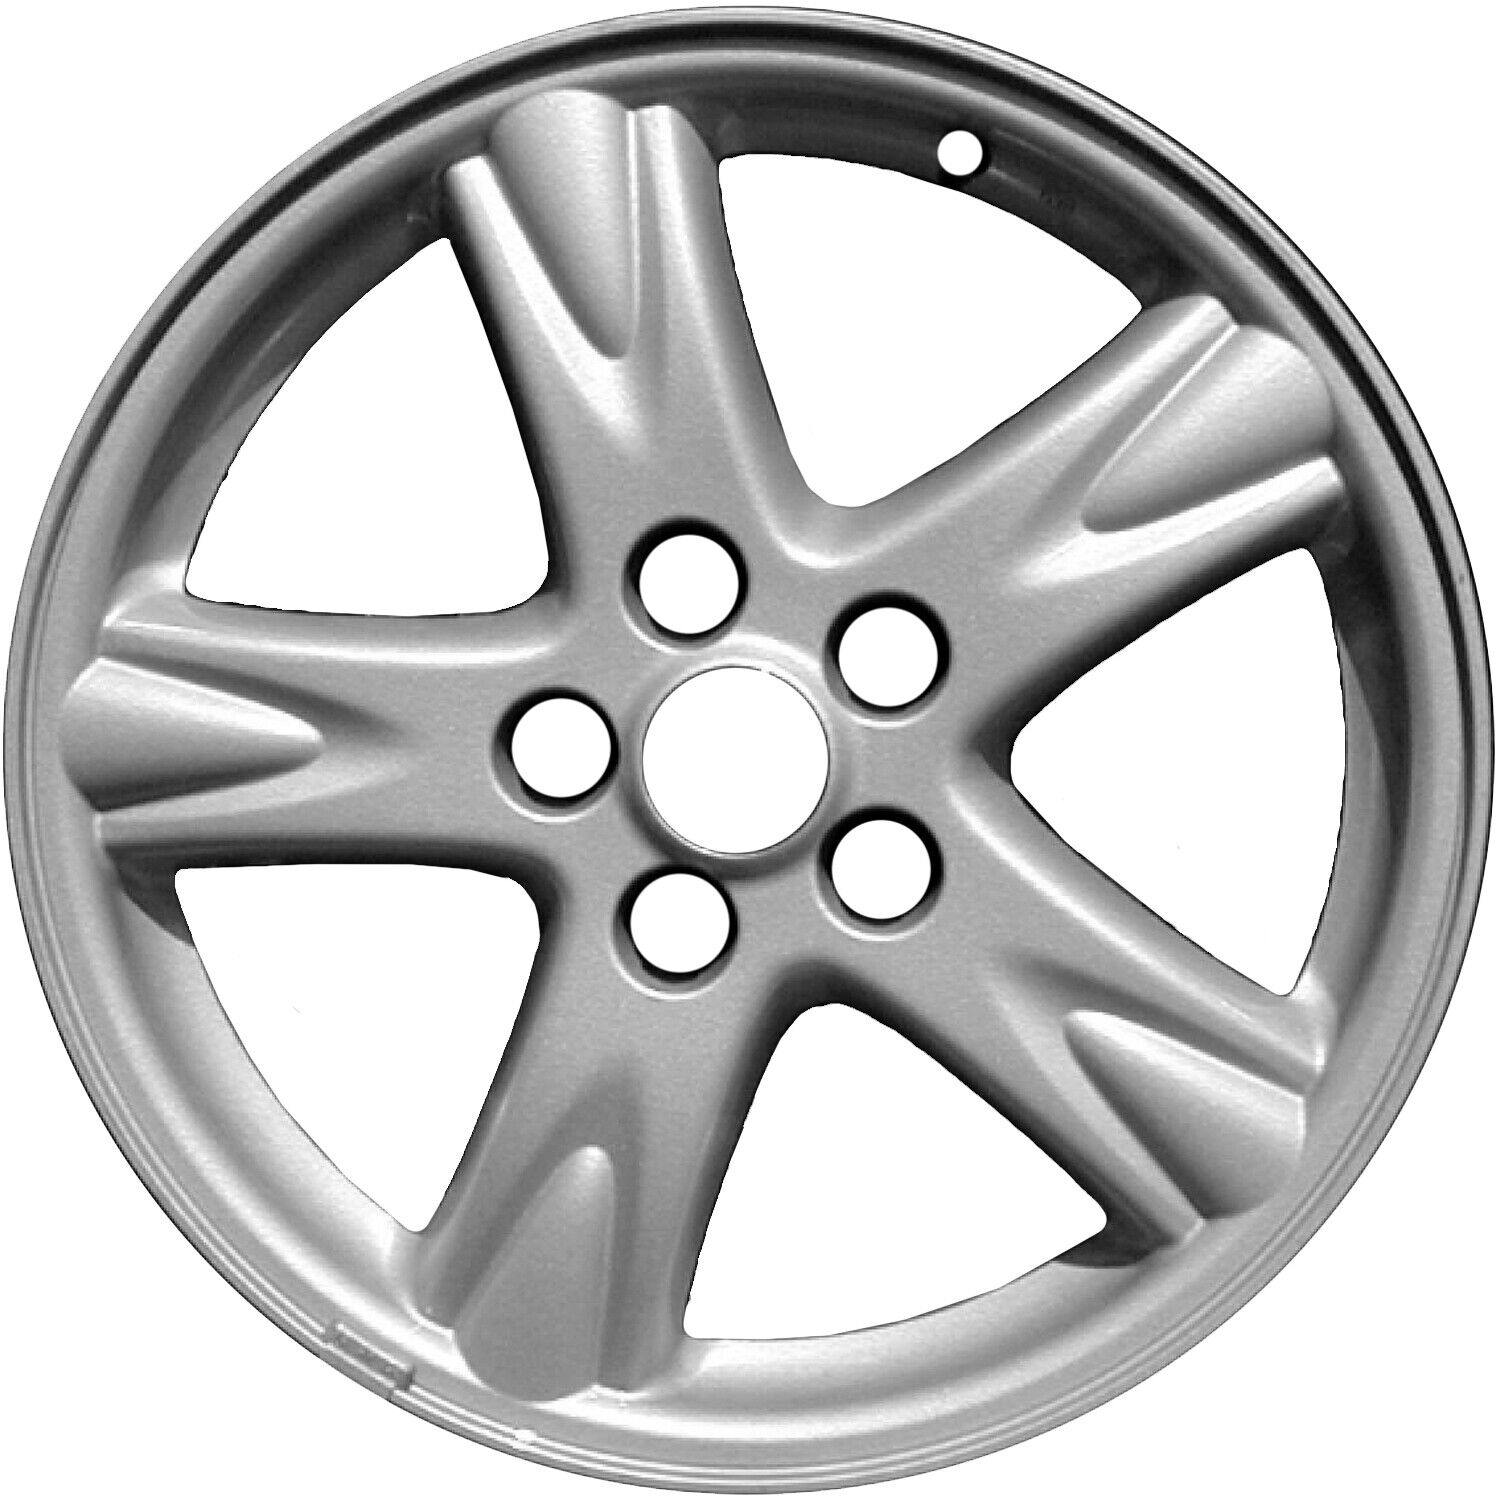 06550 Refinished Pontiac Bonneville 2002-2005 17 inch Wheel Rim